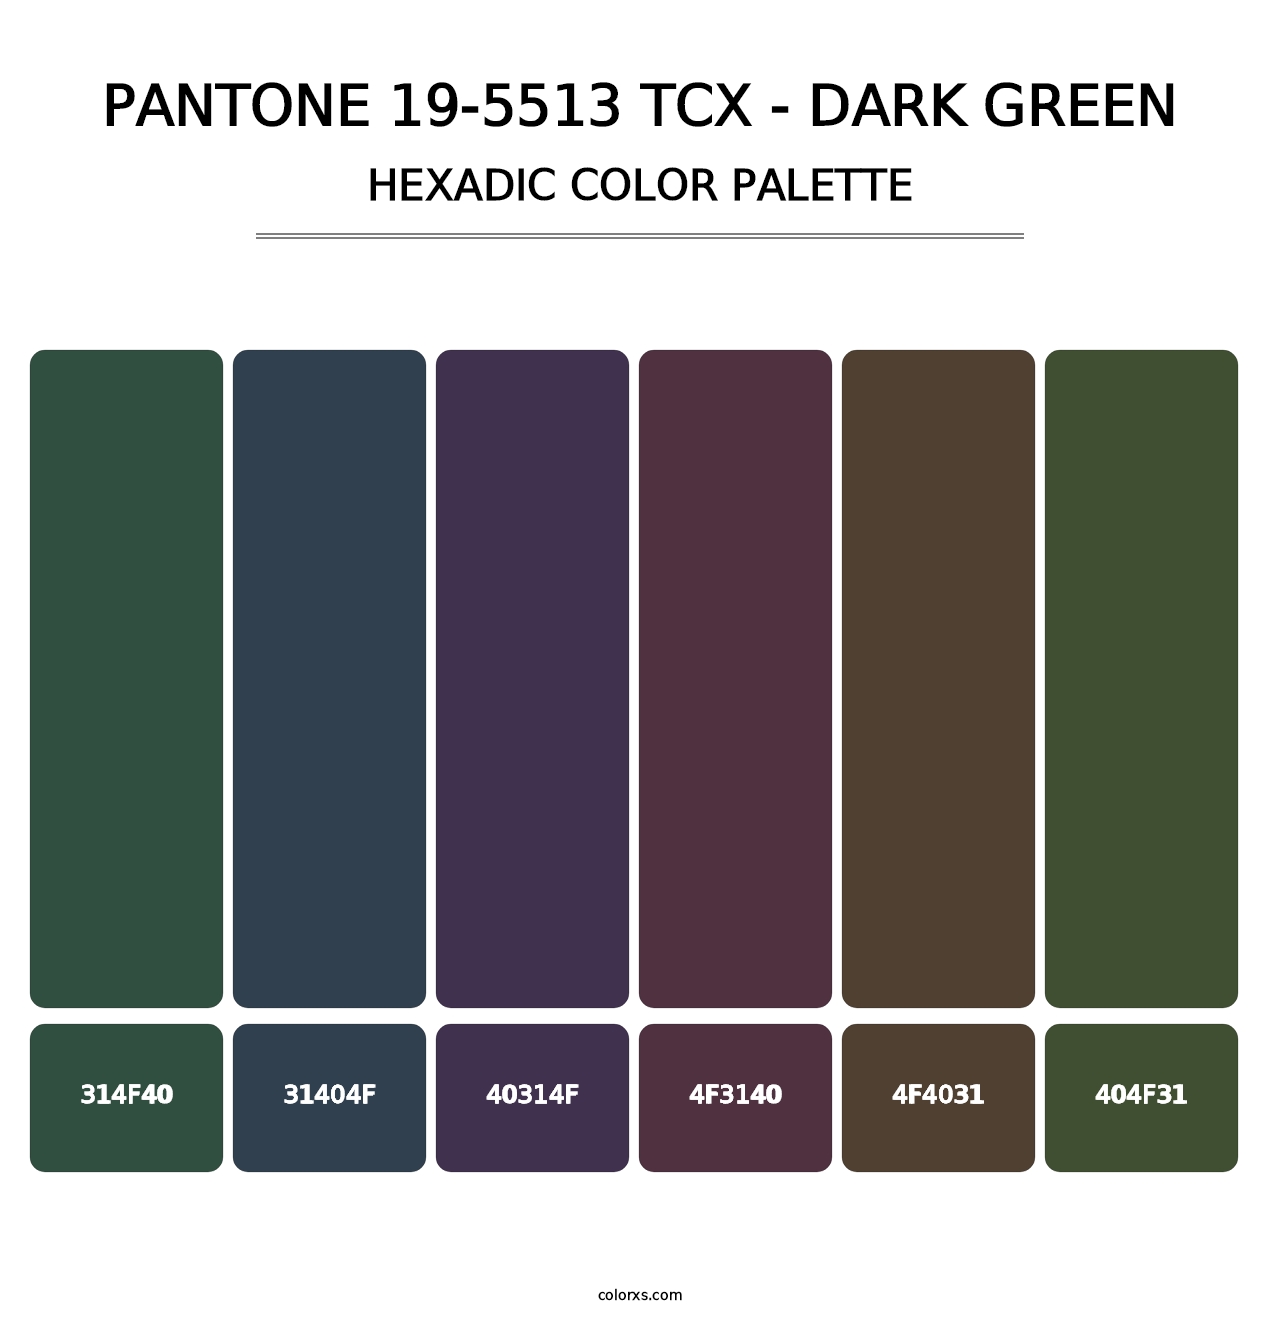 PANTONE 19-5513 TCX - Dark Green - Hexadic Color Palette